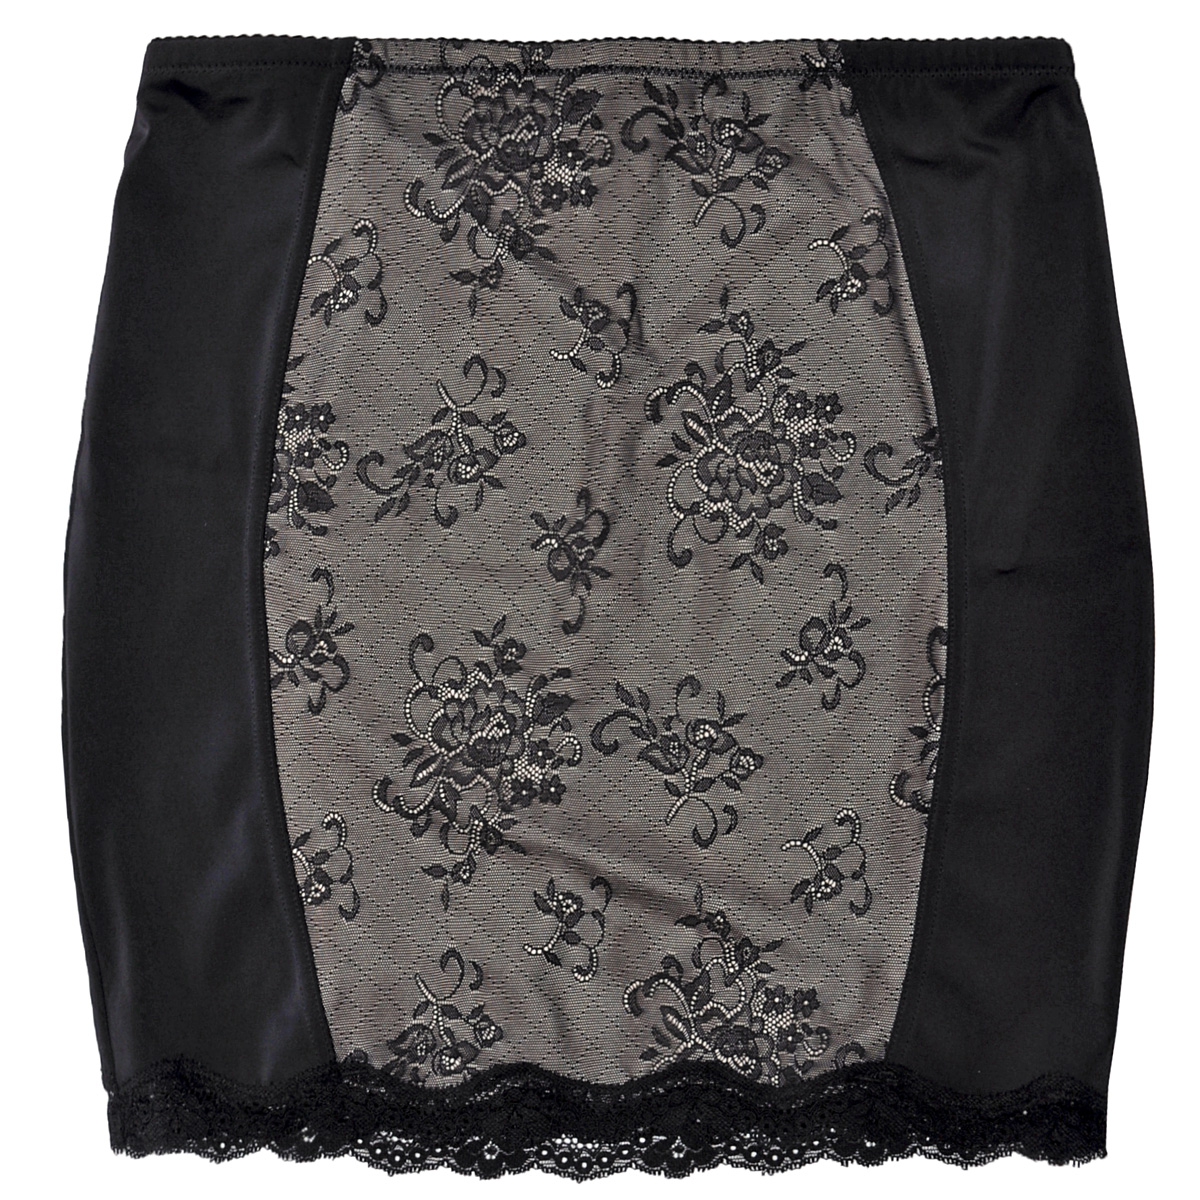  Luxury Lace Slimming Skirt, ,    . 49LL - Magic BodyFashion49LL  Magic BodyFashion Luxury Lace Slimming Skirt,      ,      .         .       ,   .     